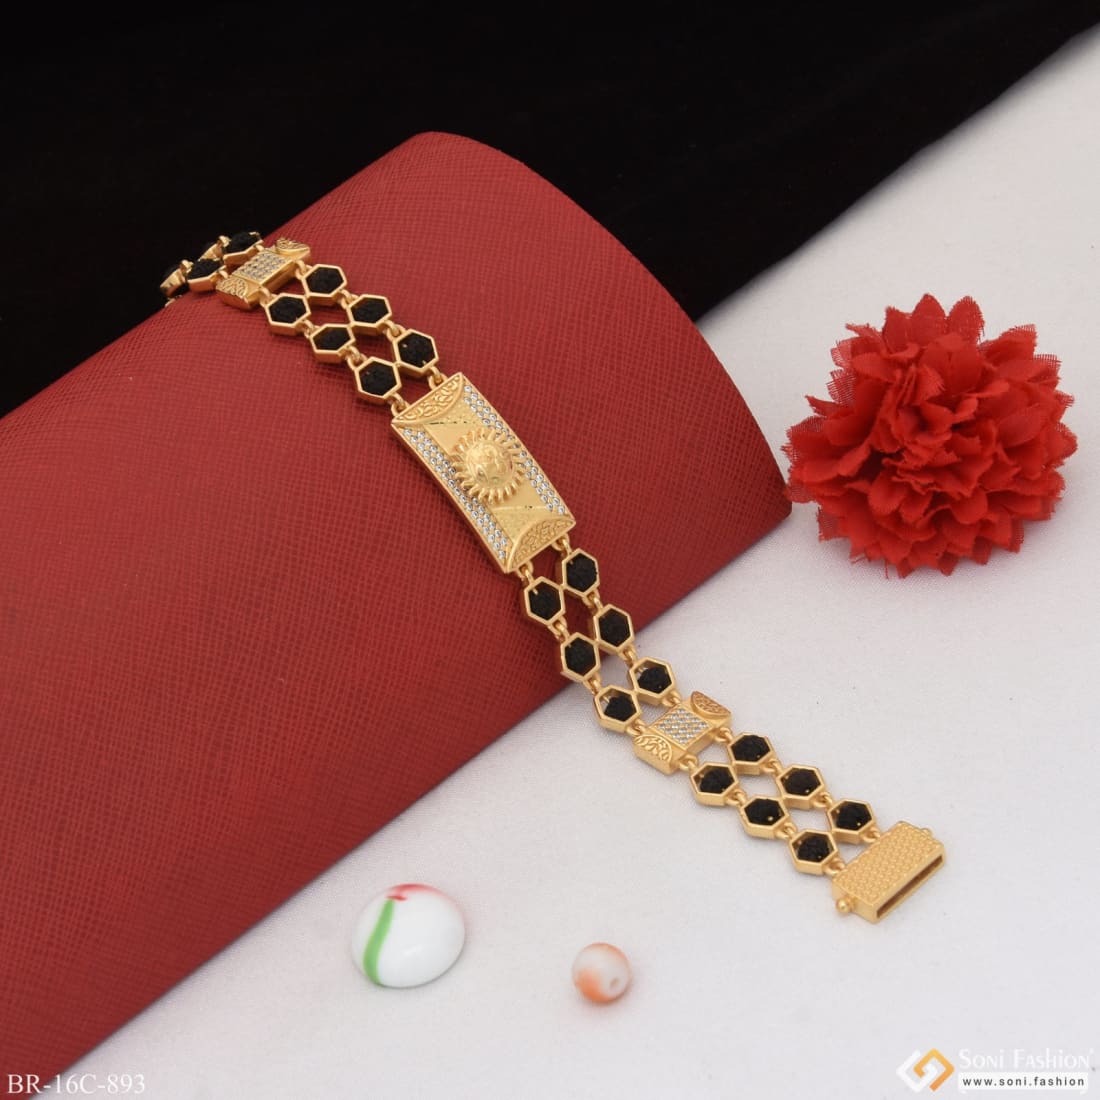 9 Stunning Crystal Bracelet Designs - Latest Collection